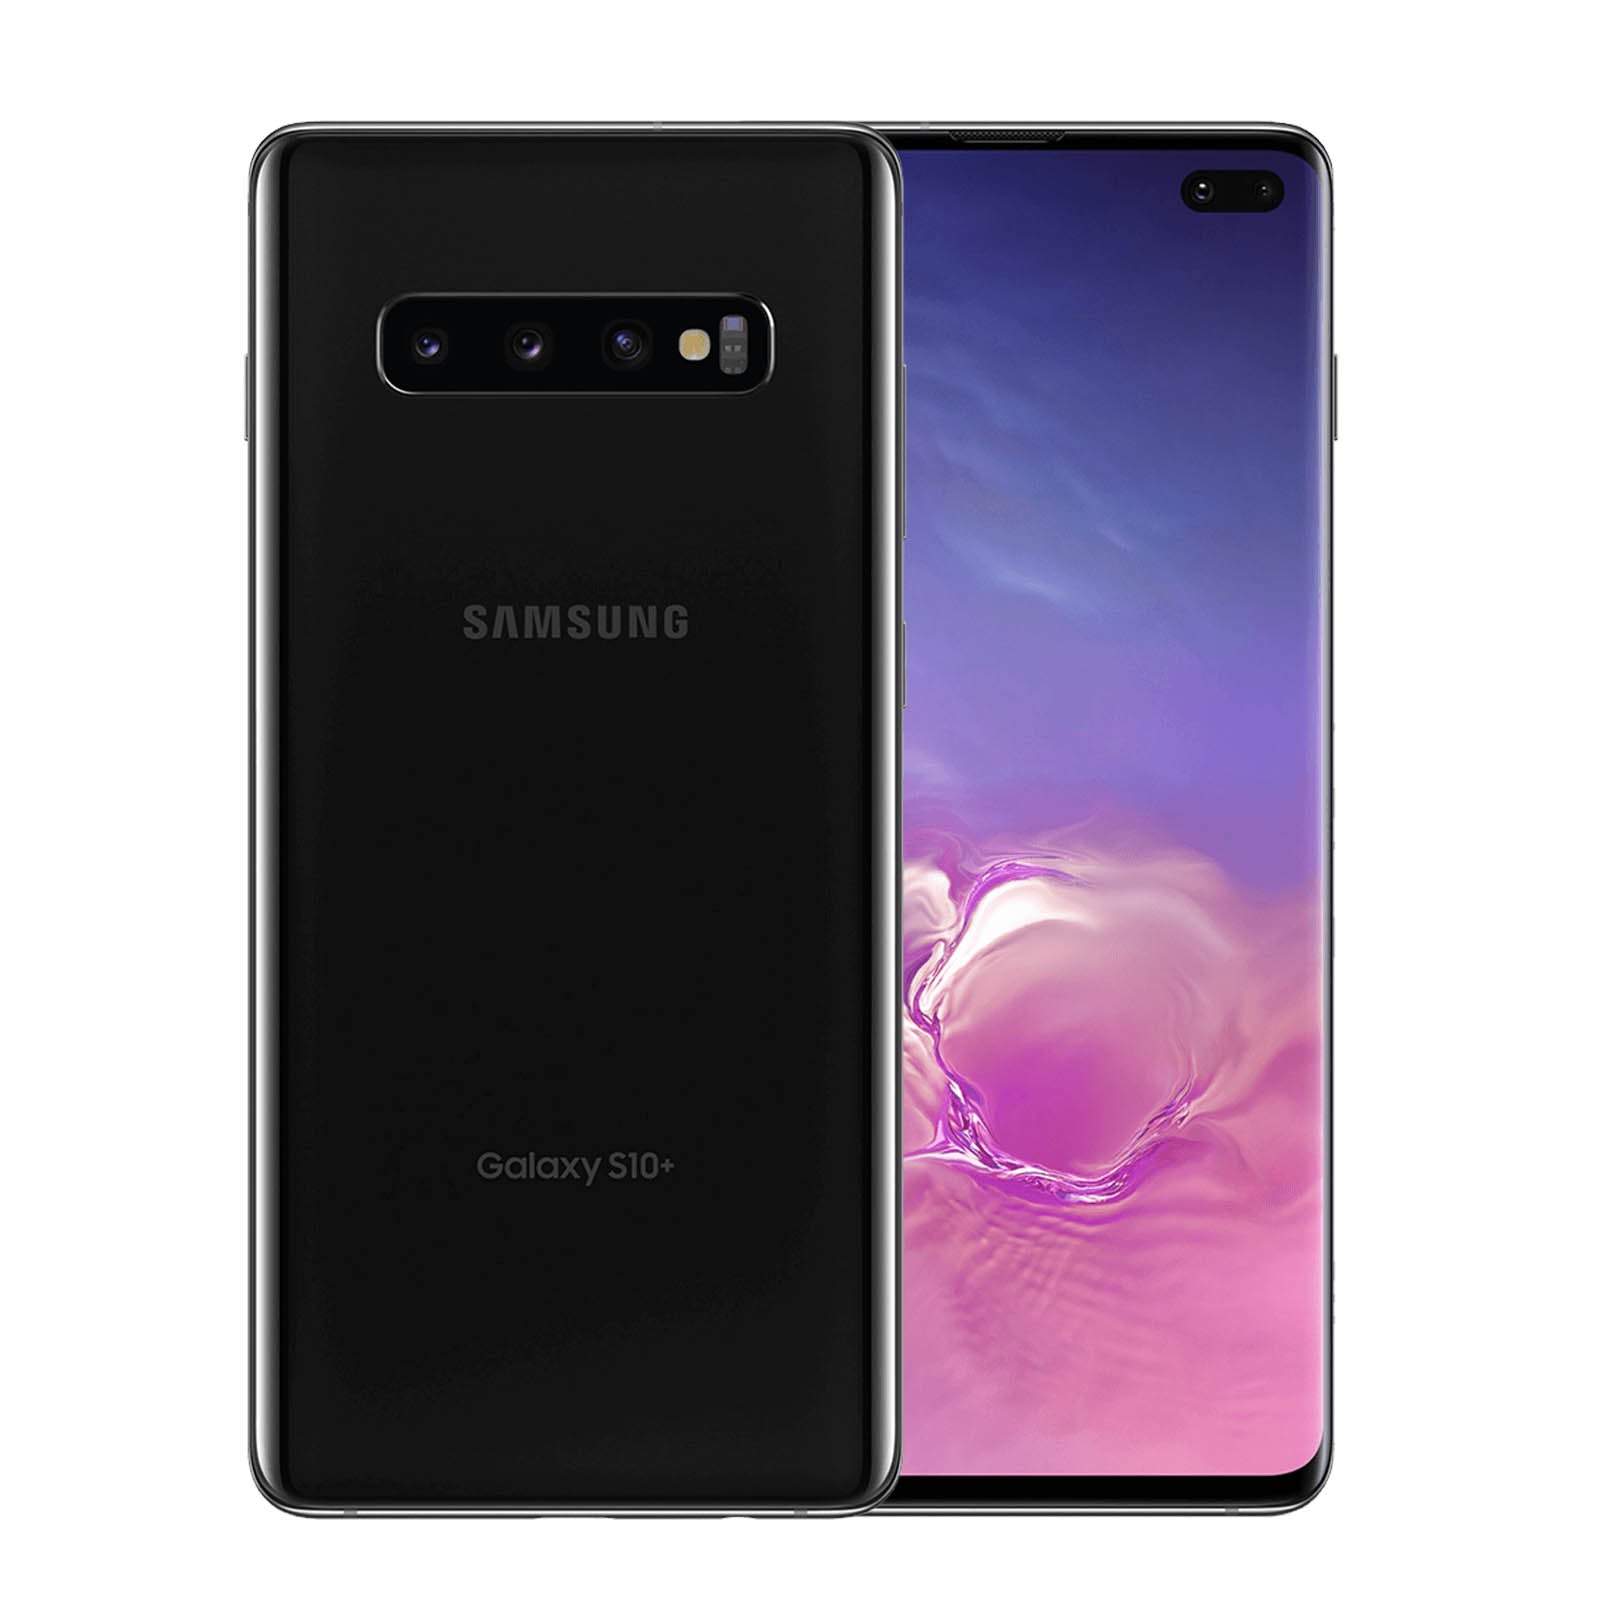 Samsung Galaxy S10 Plus 512GB Prism Black Very good - Unlocked